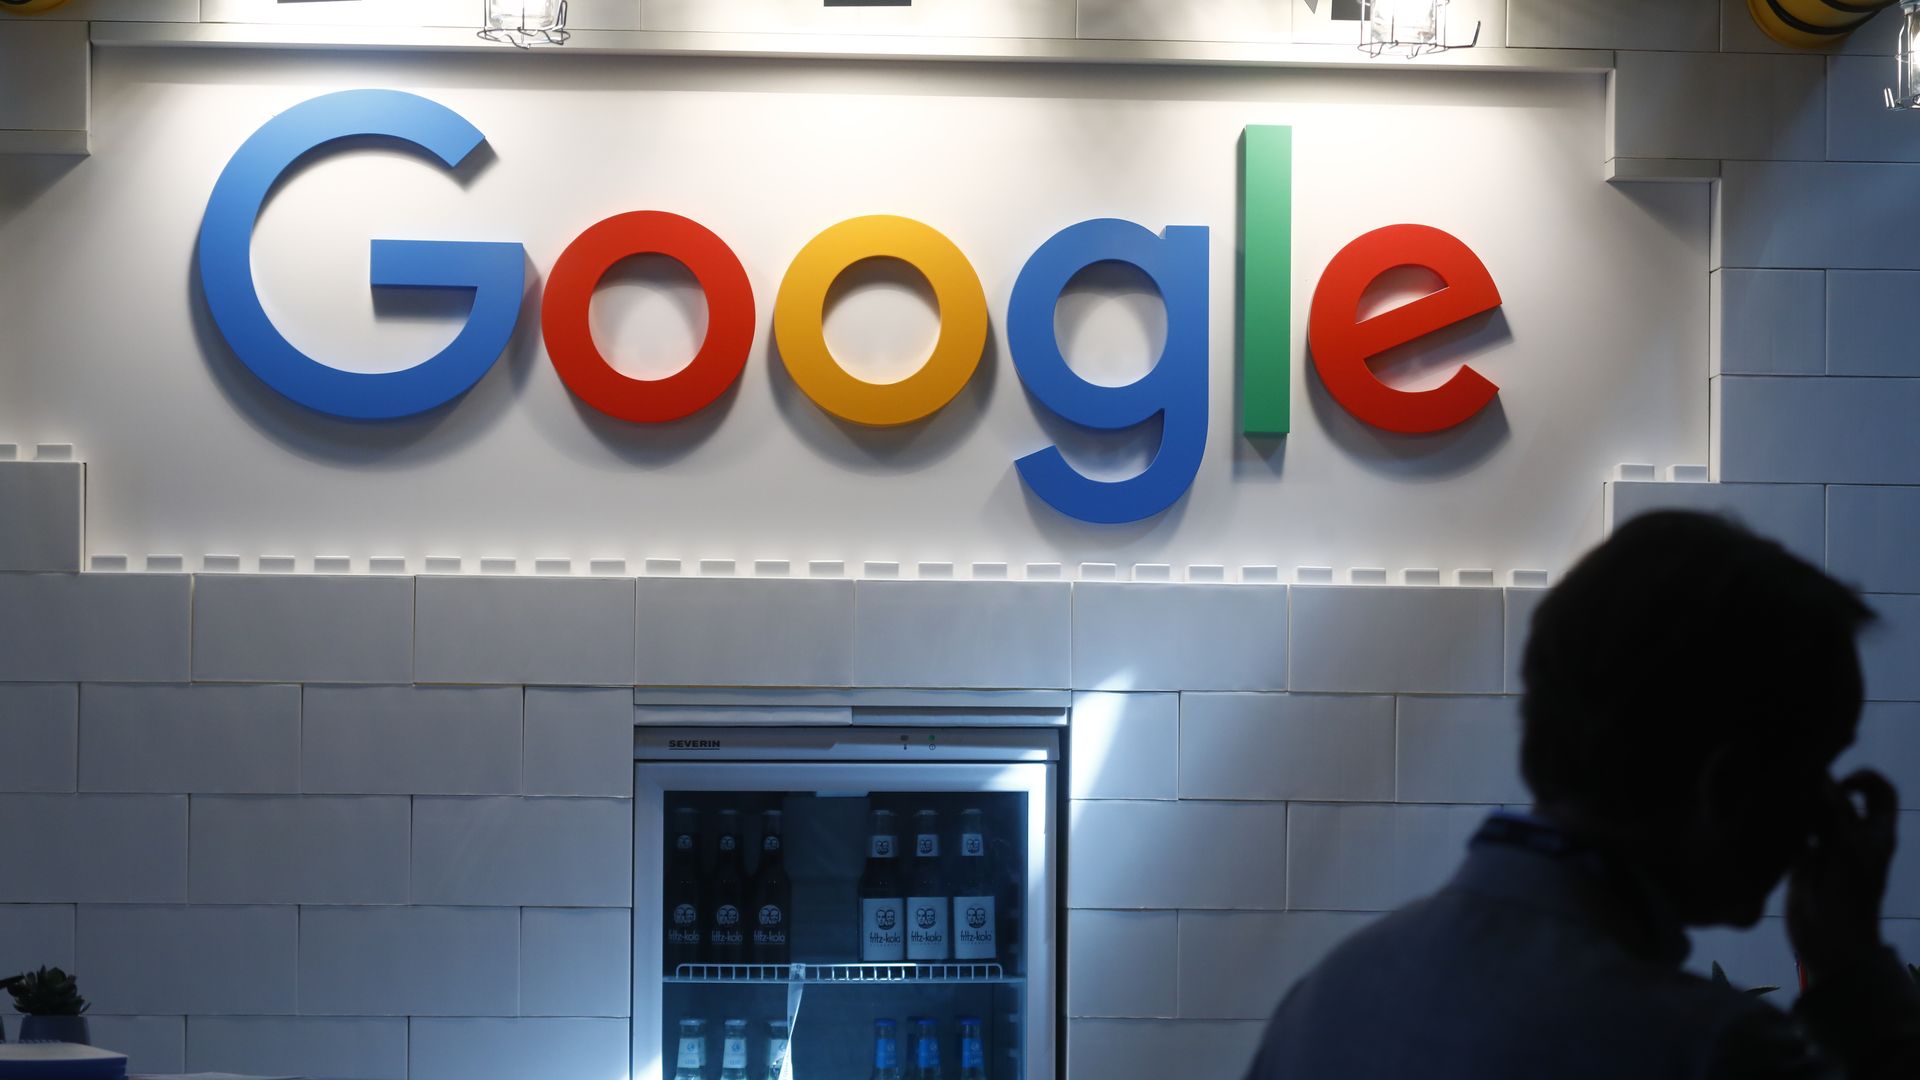 The Google logo on a wall, above a small fridge